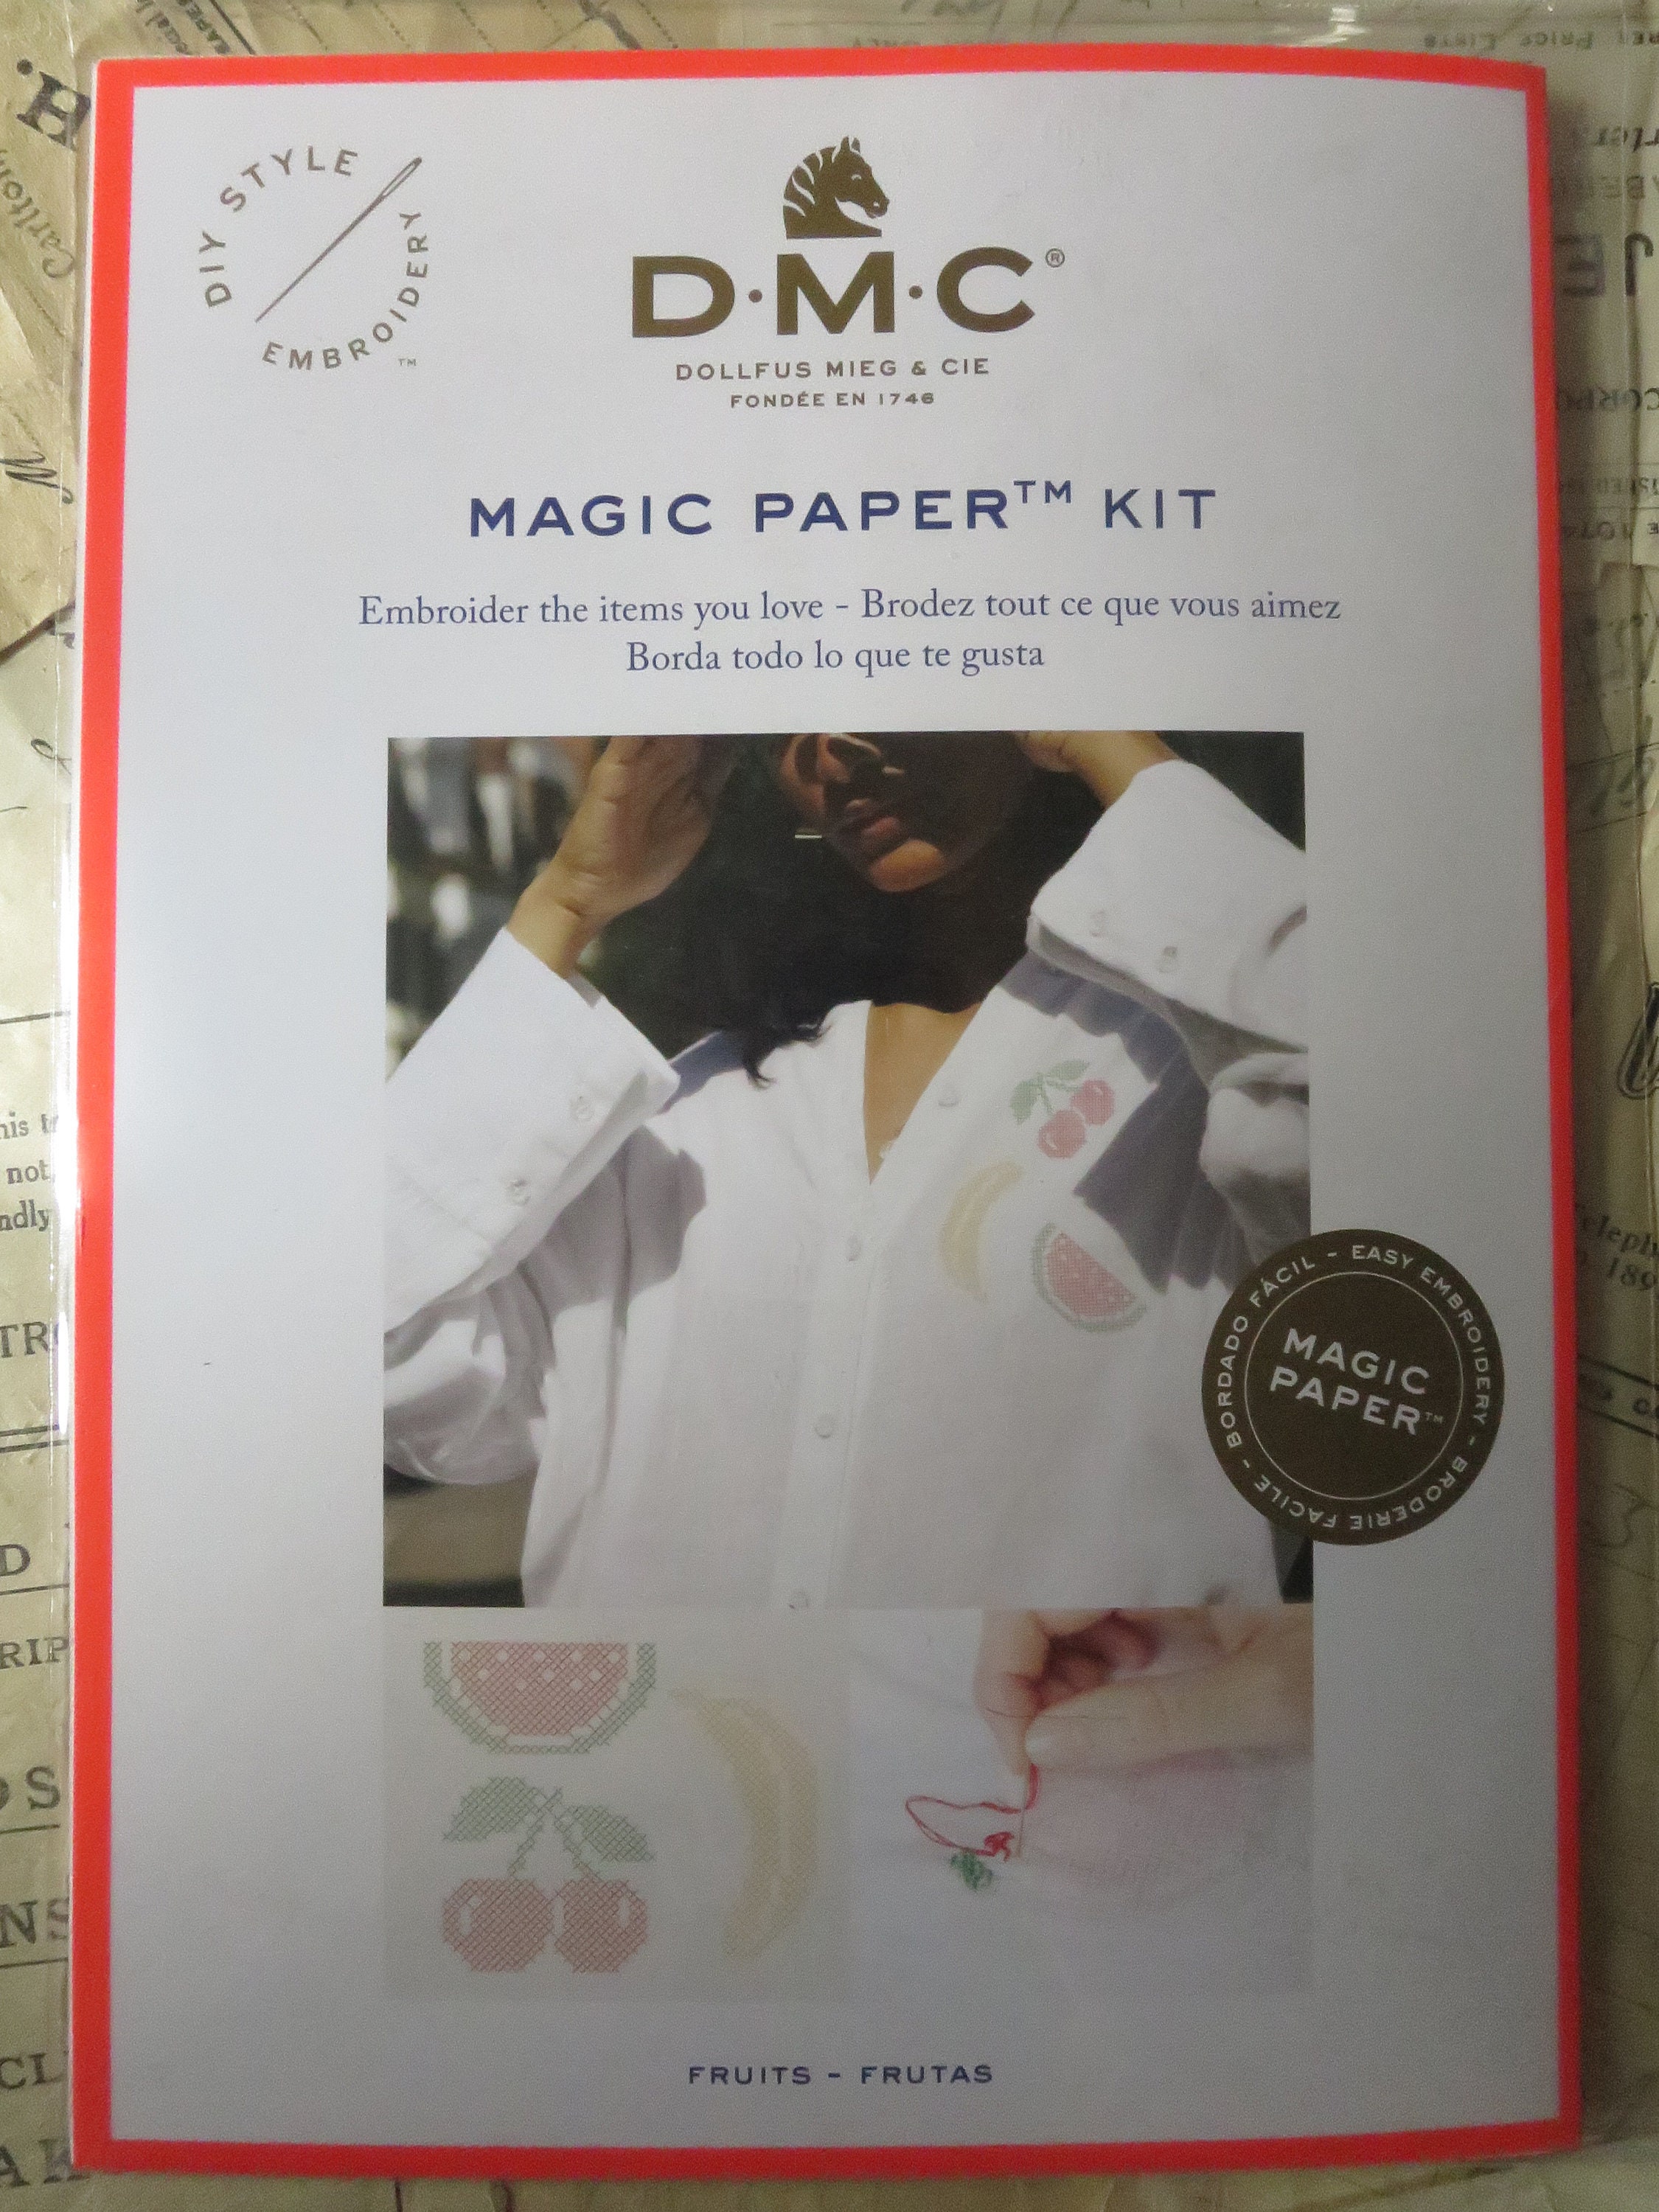 DMC Magic Paper Cross-Stitch kit - Fruit - All Things EFFY